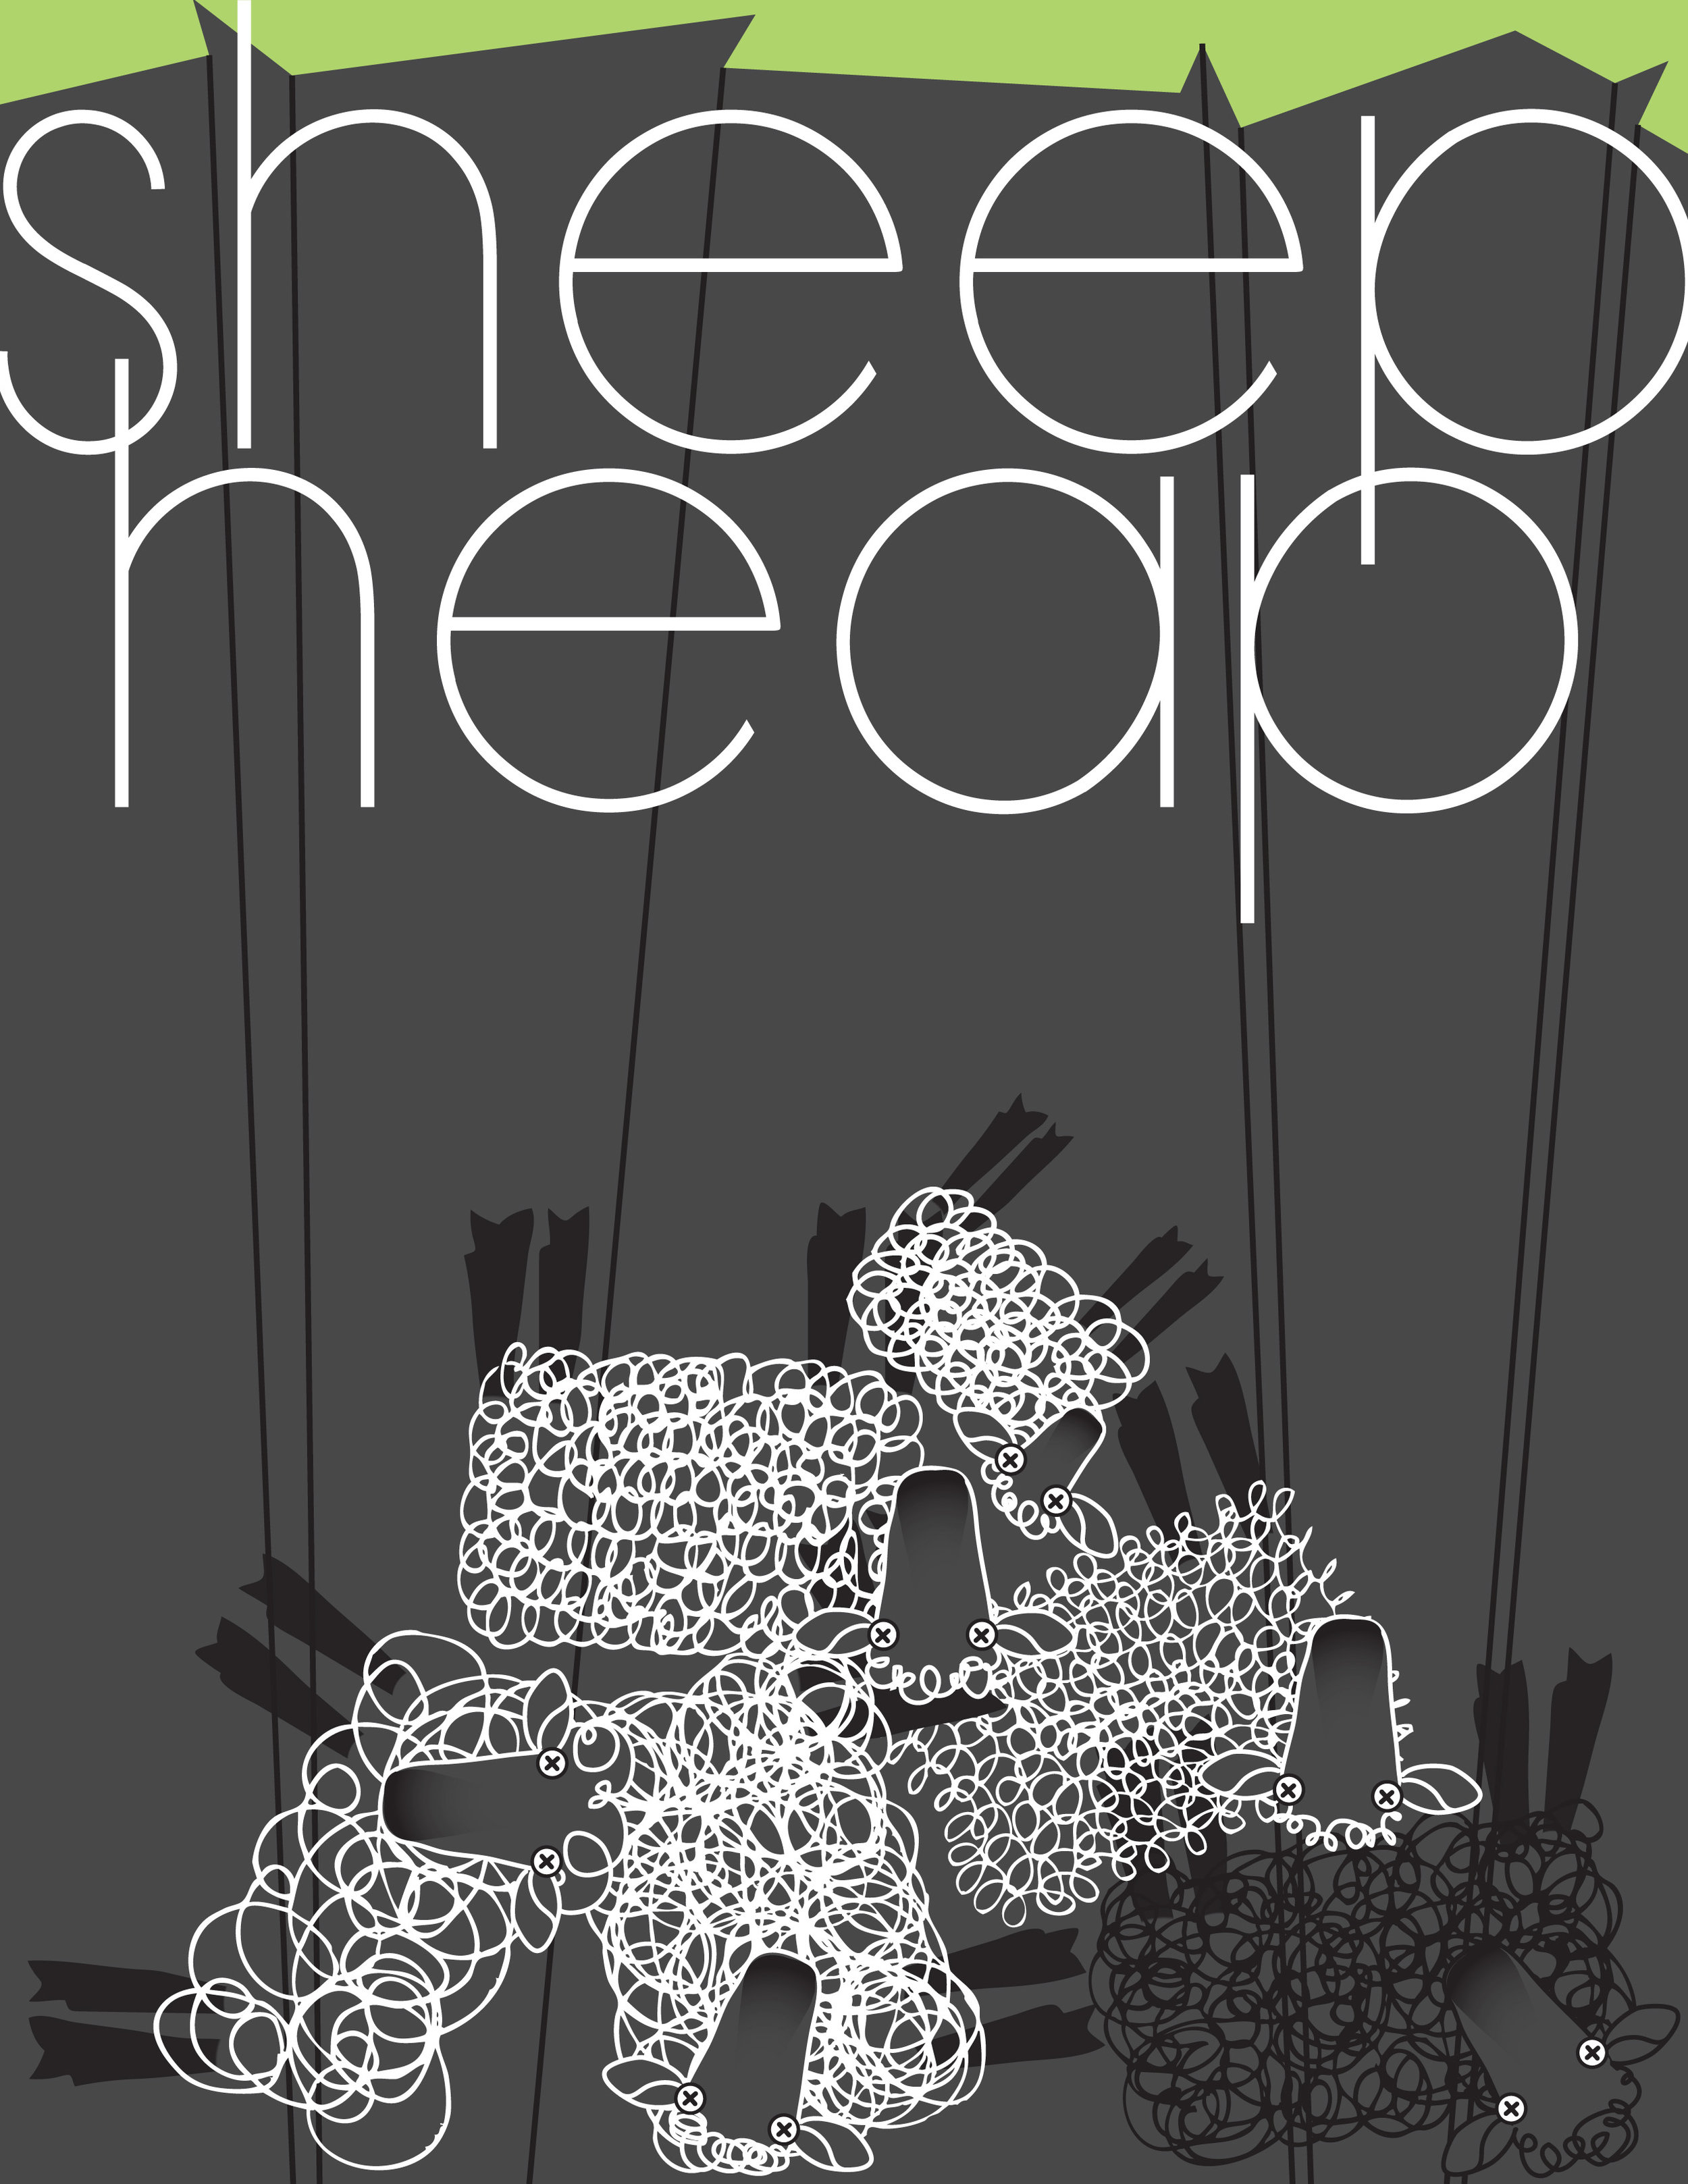 Sheep Sleep Book 2-7.jpg